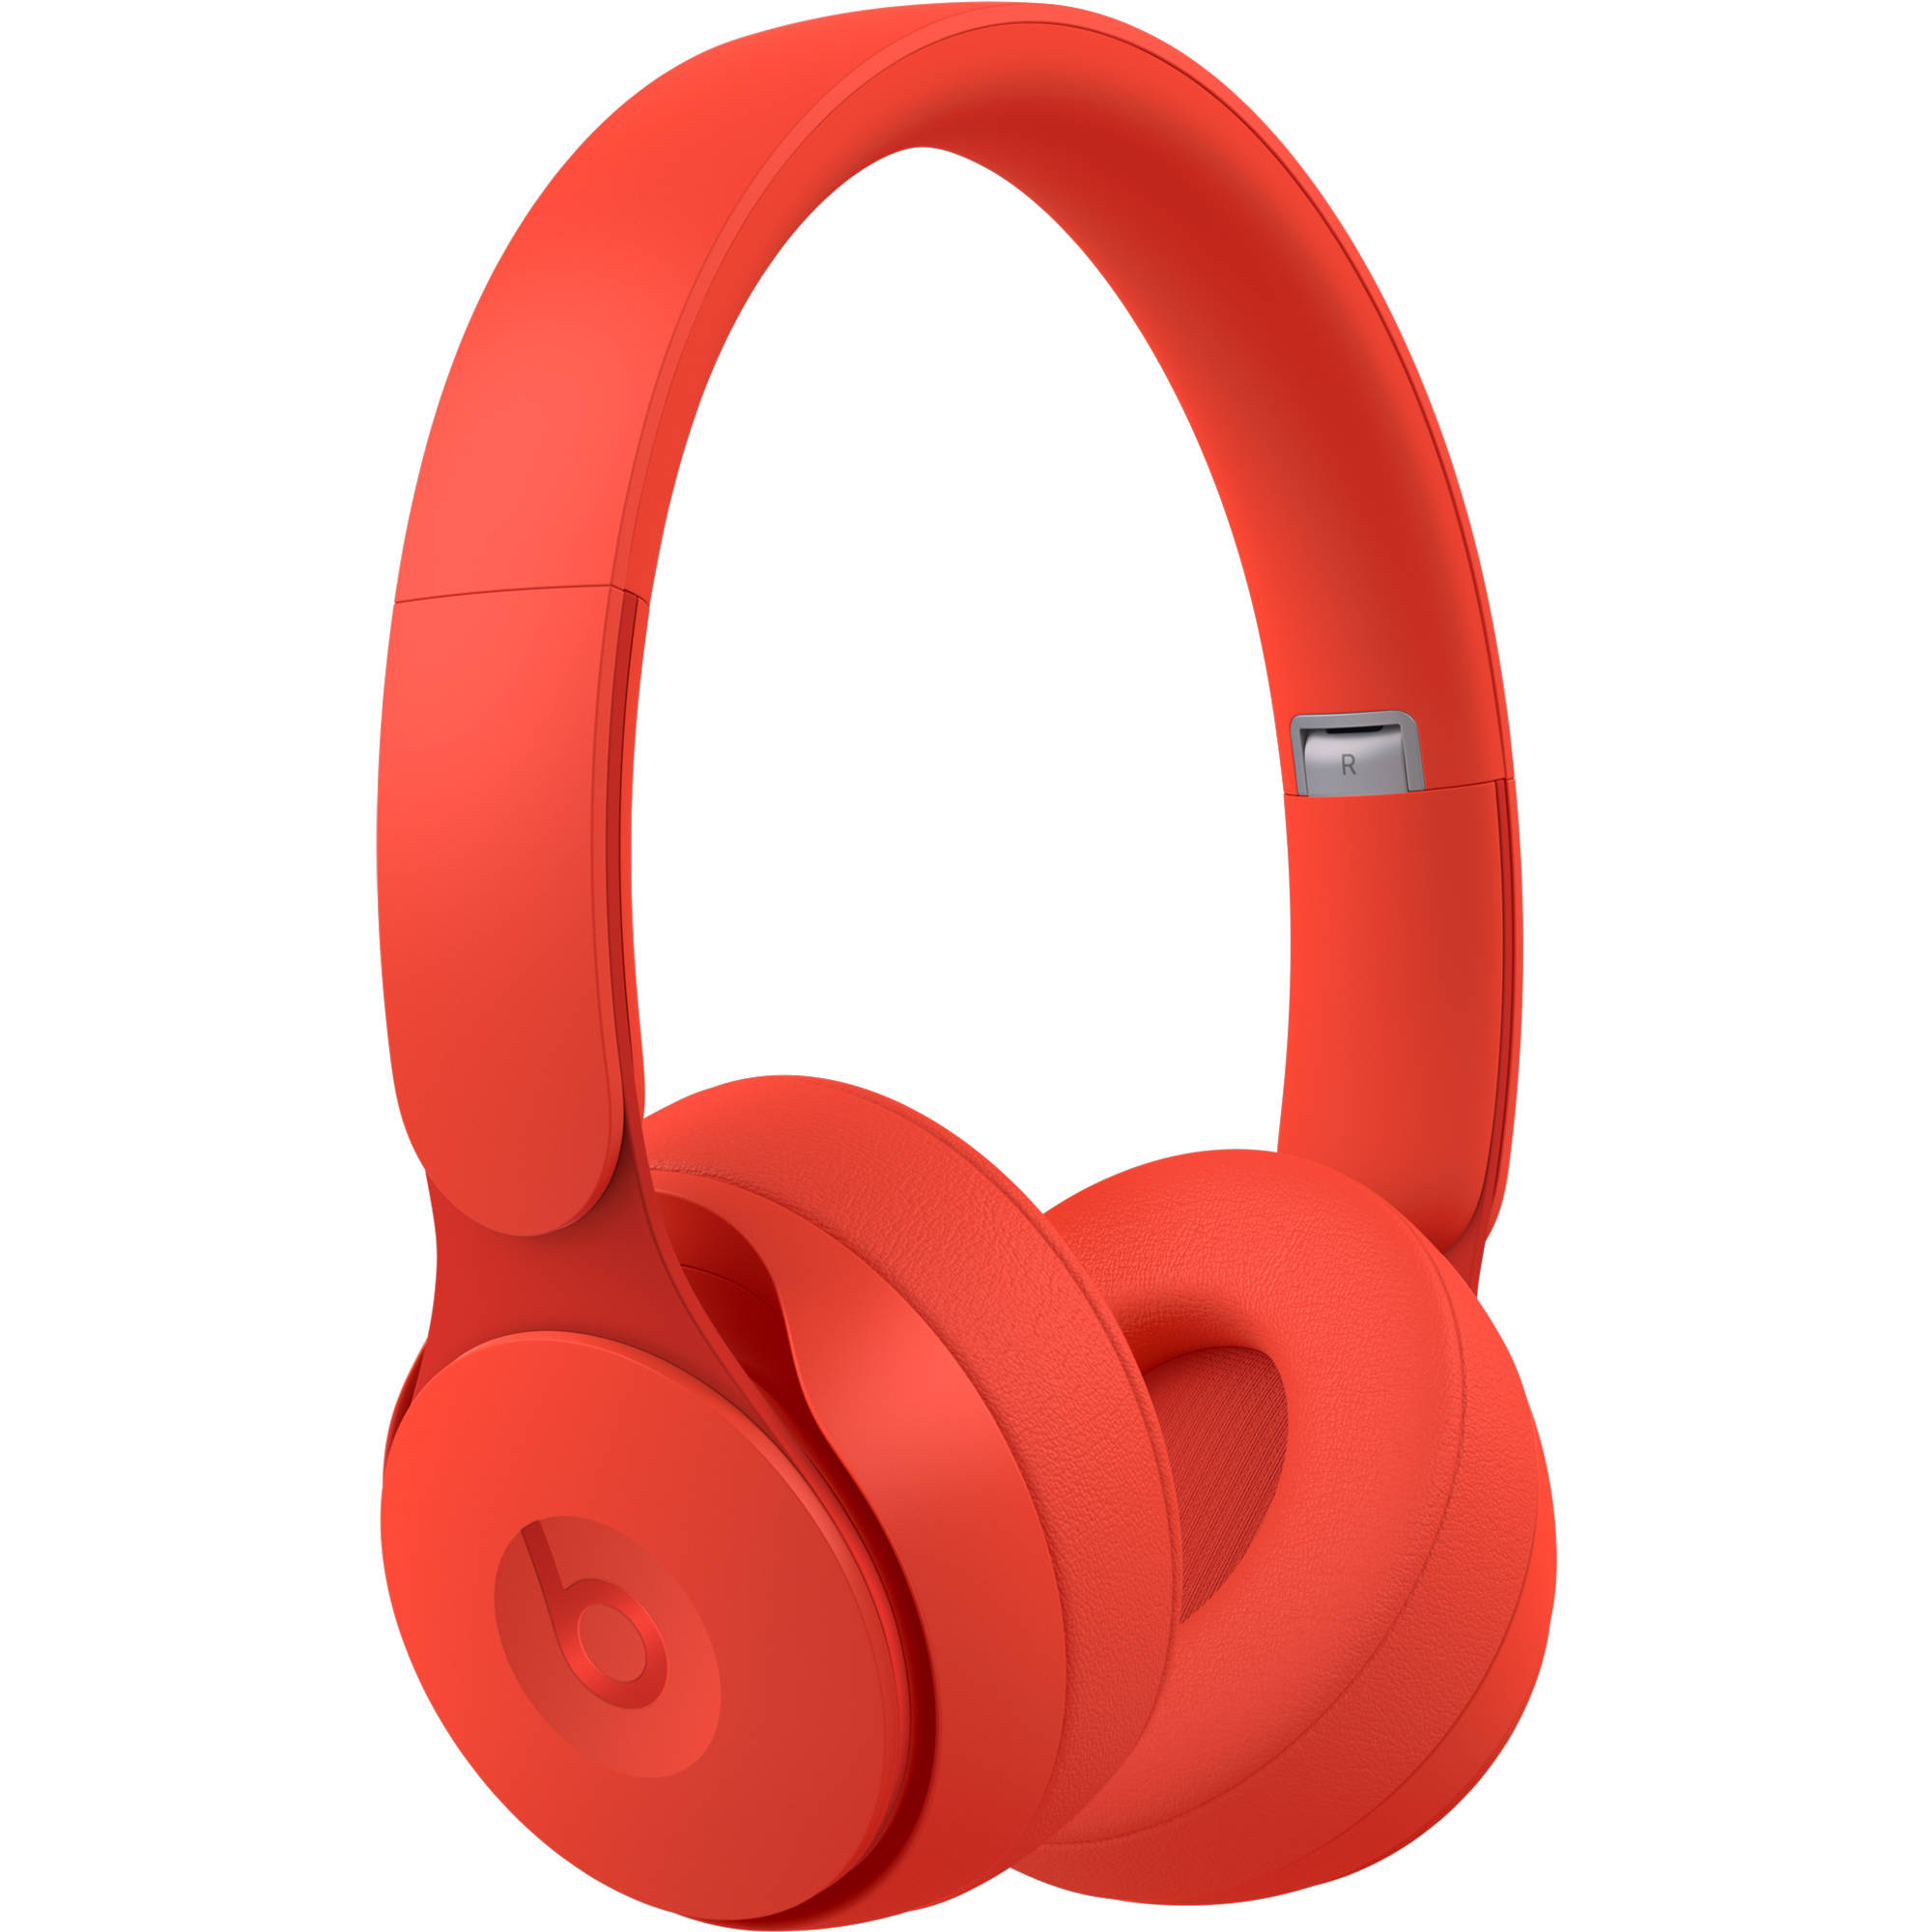 Red Beats Solo Pro headphones